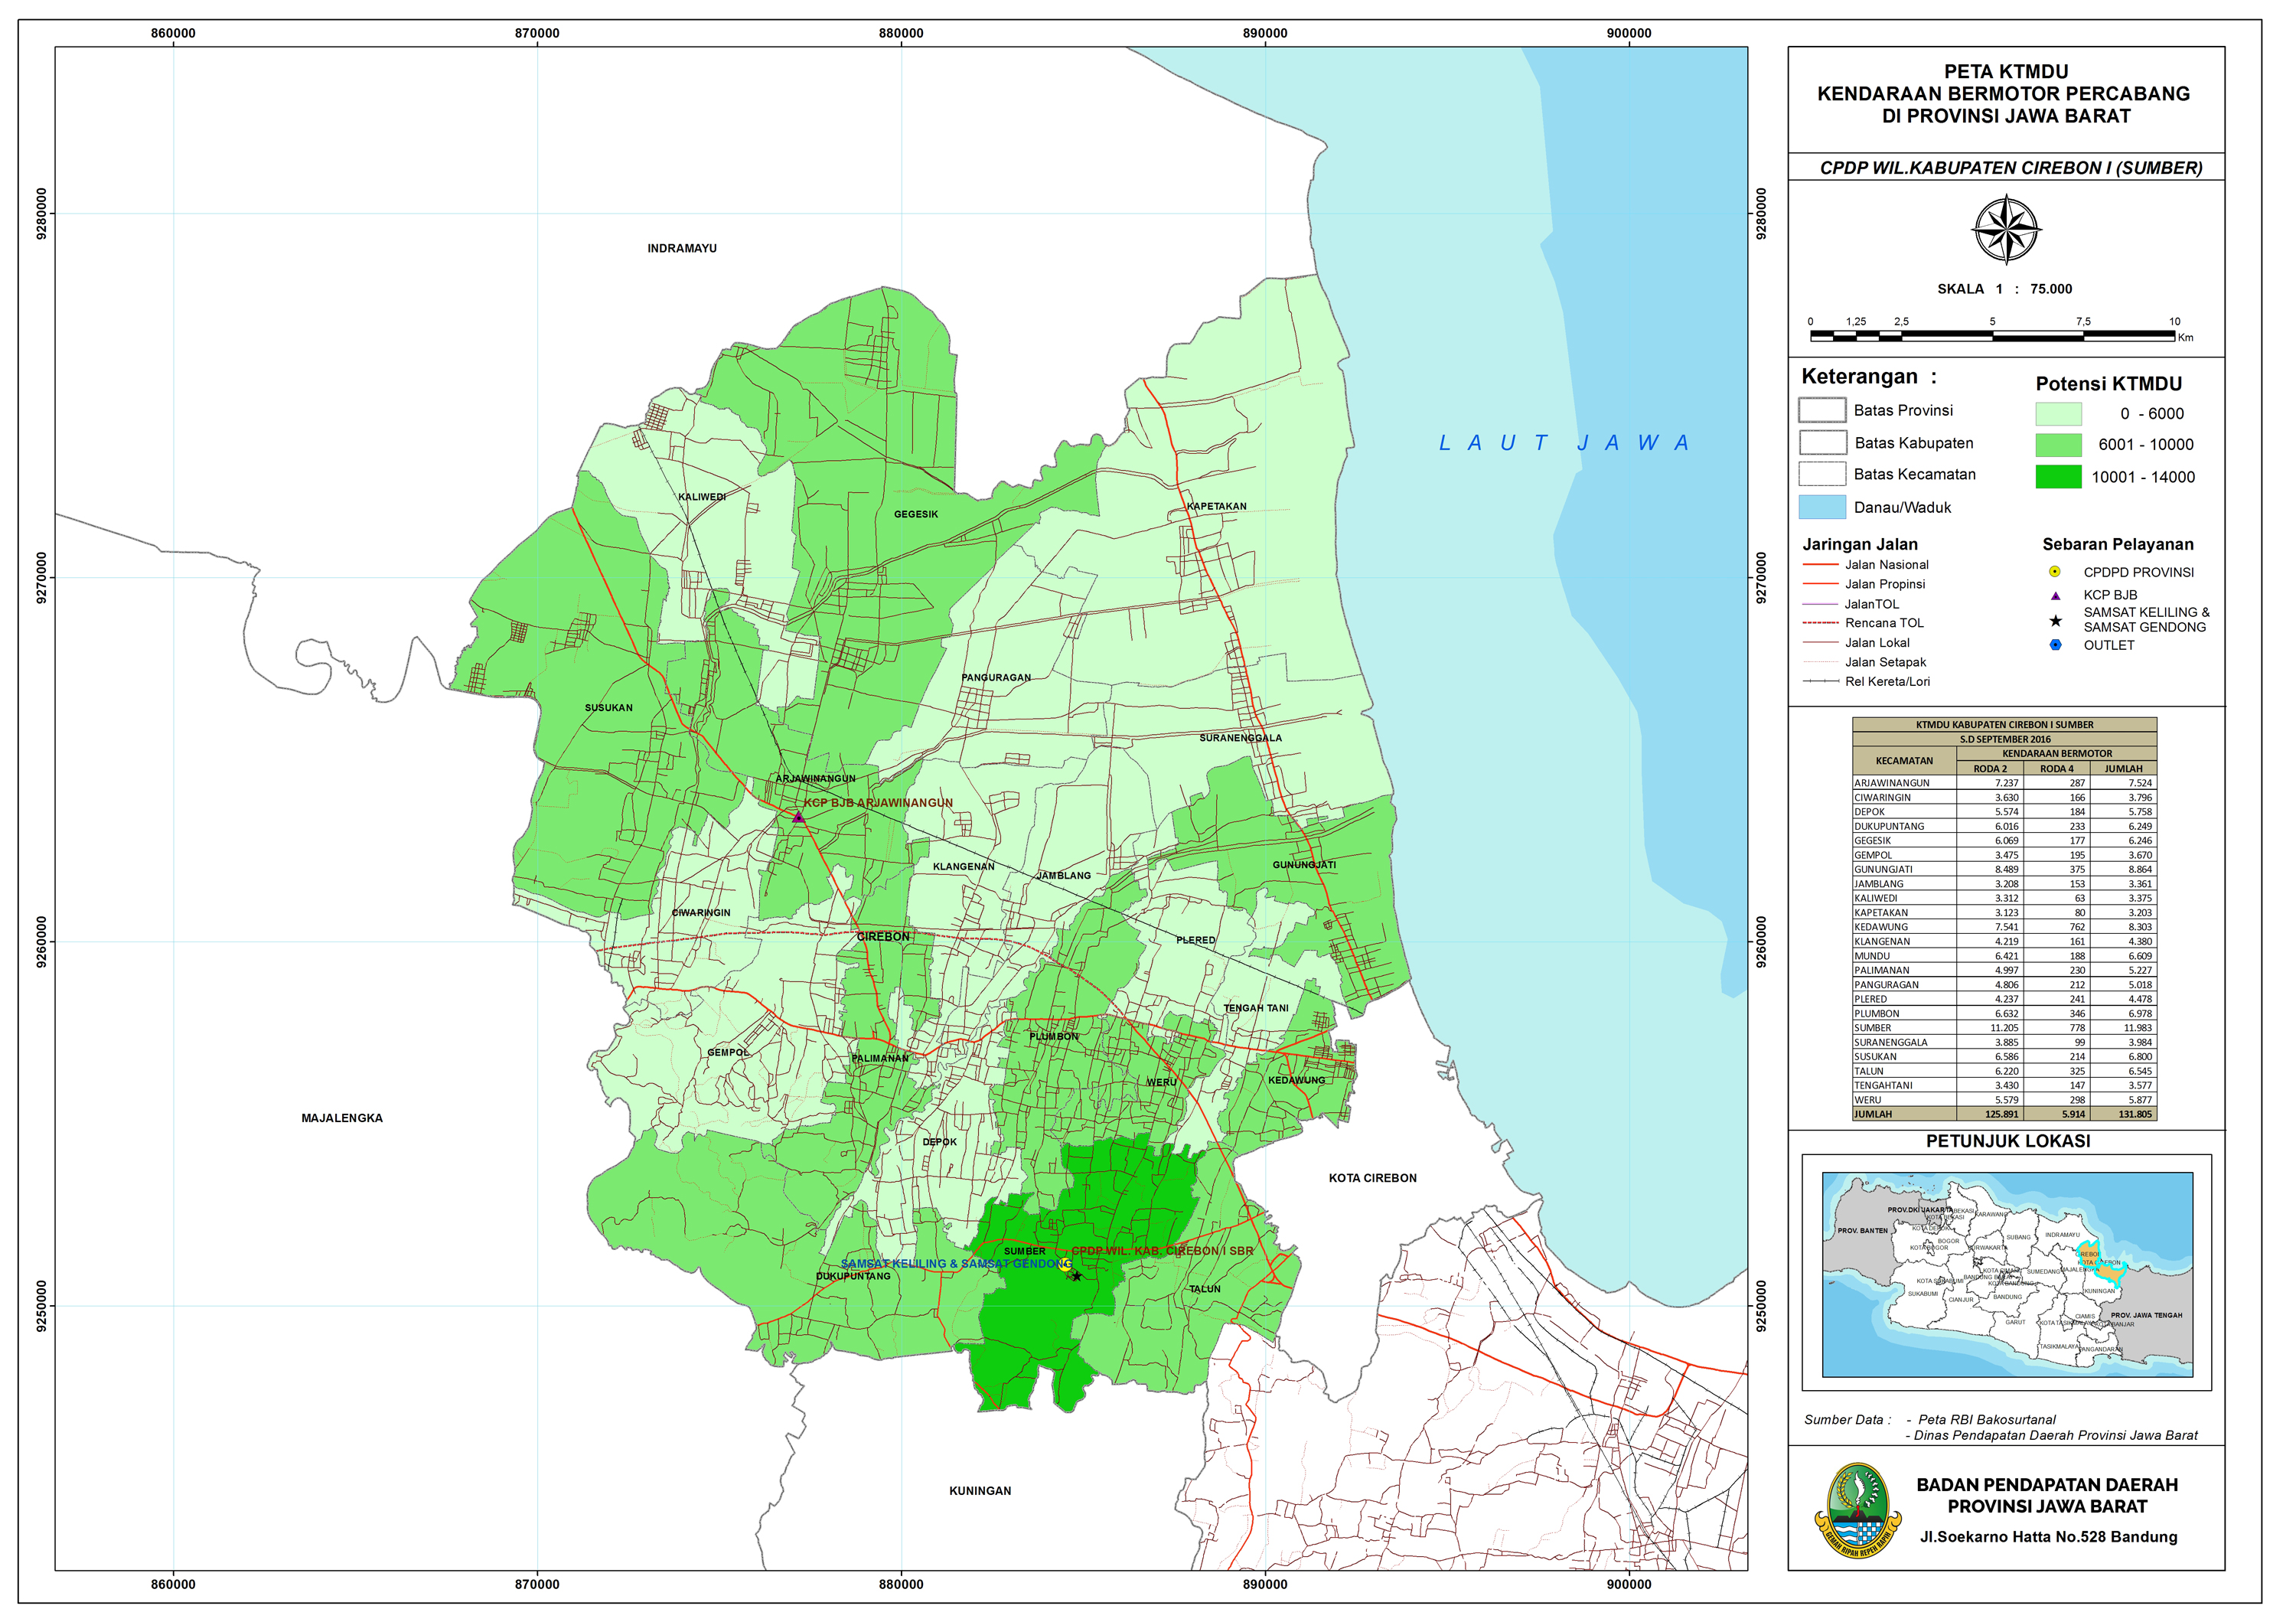 Peta-KTMDU-Cabang-Kabupaten-Cirebon-I-Sumber - BAPENDA JABAR